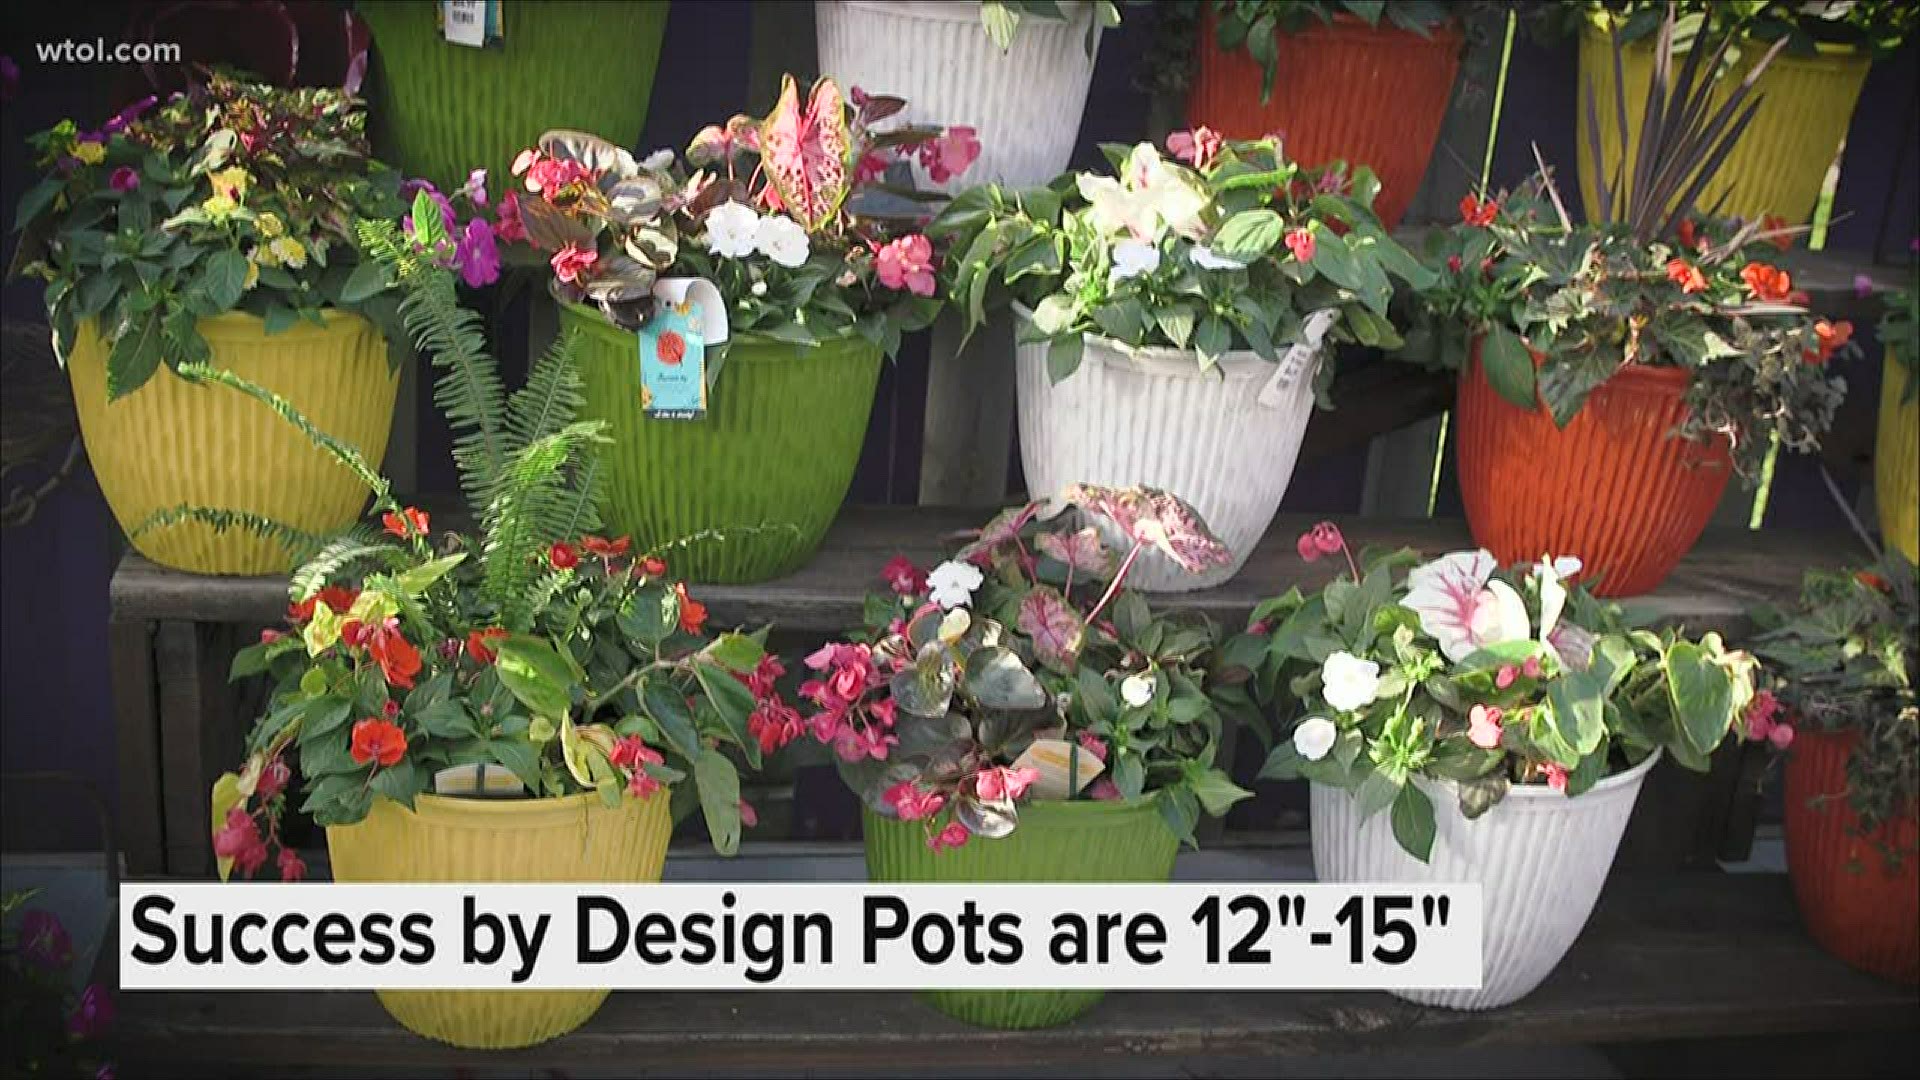 'Success by design' - Nature's Corner explains their program on design pots.